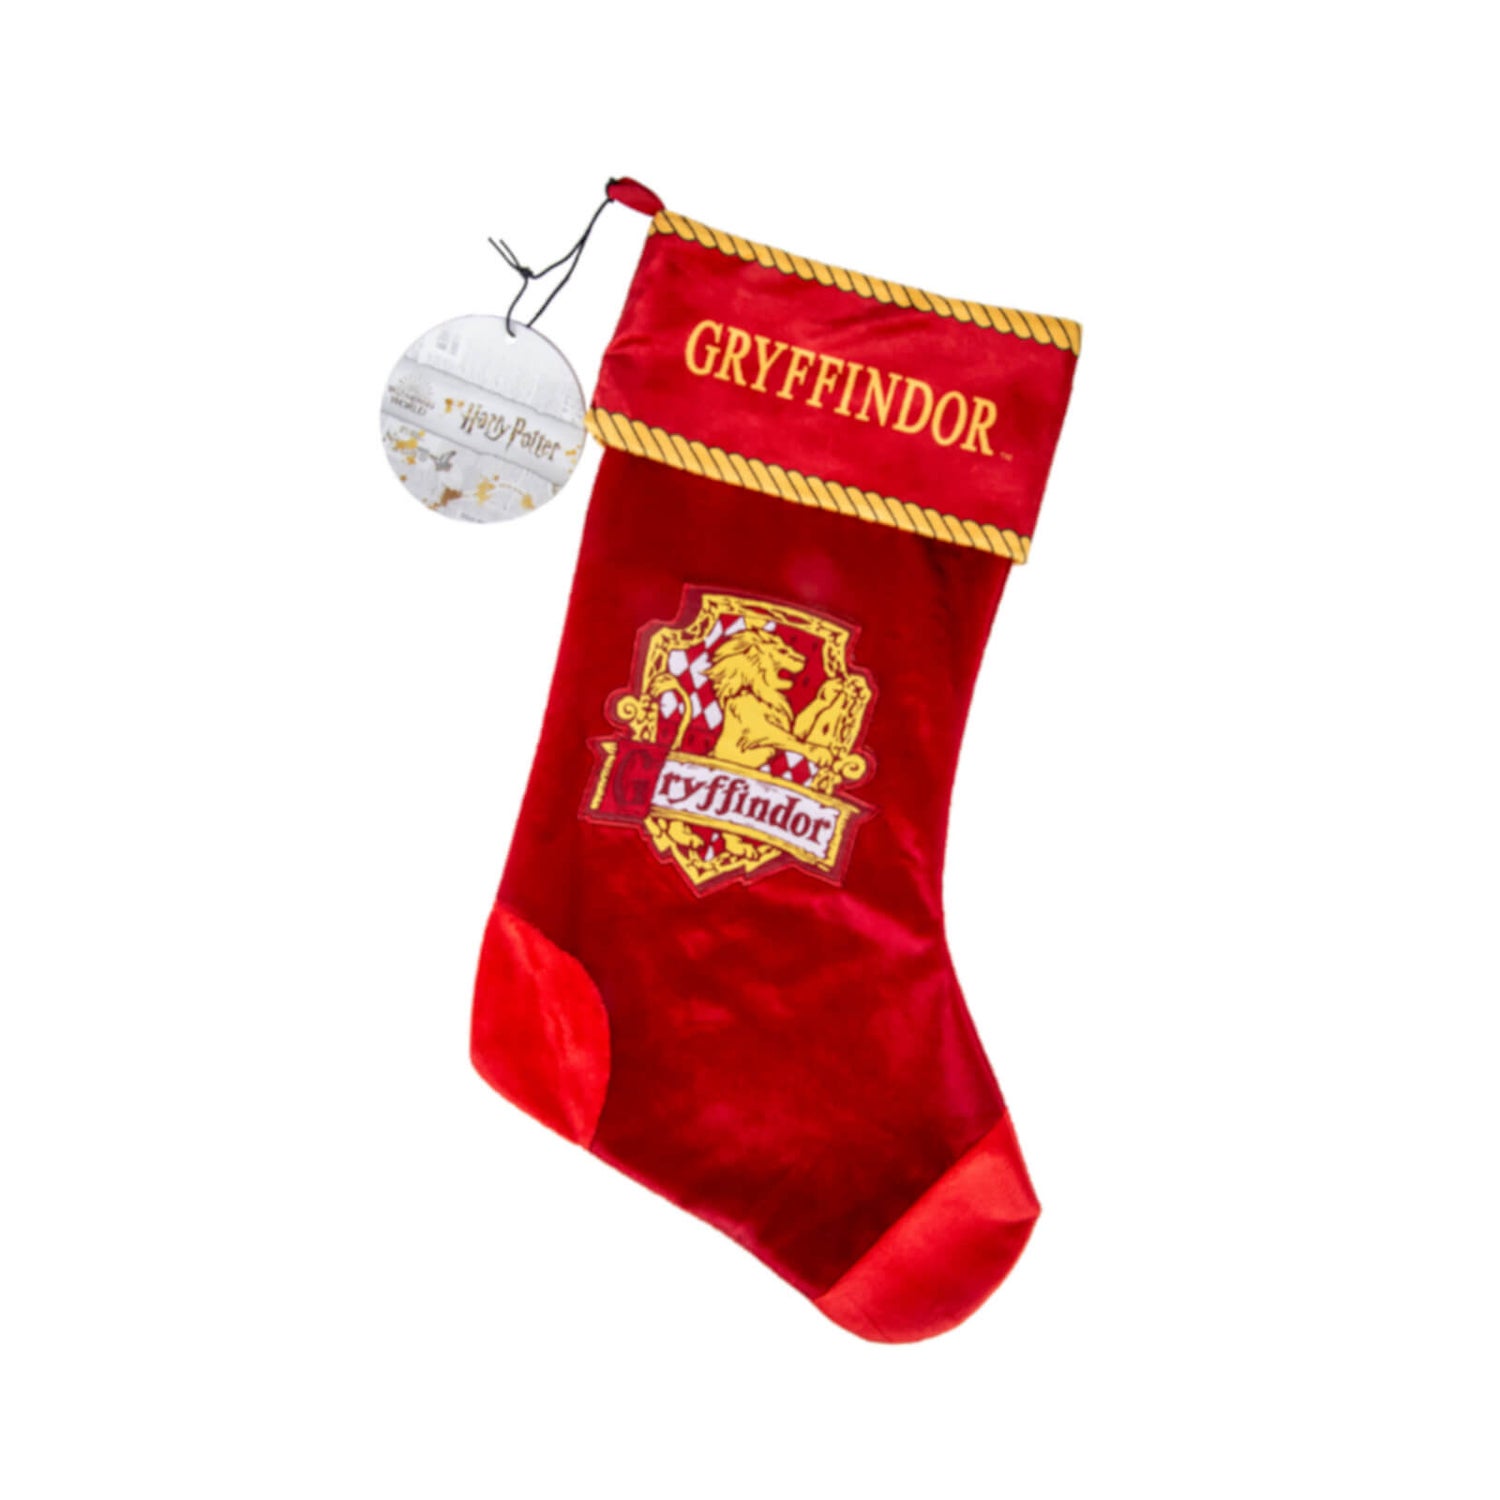 Harry Potter: Gryffindor Christmas Stocking